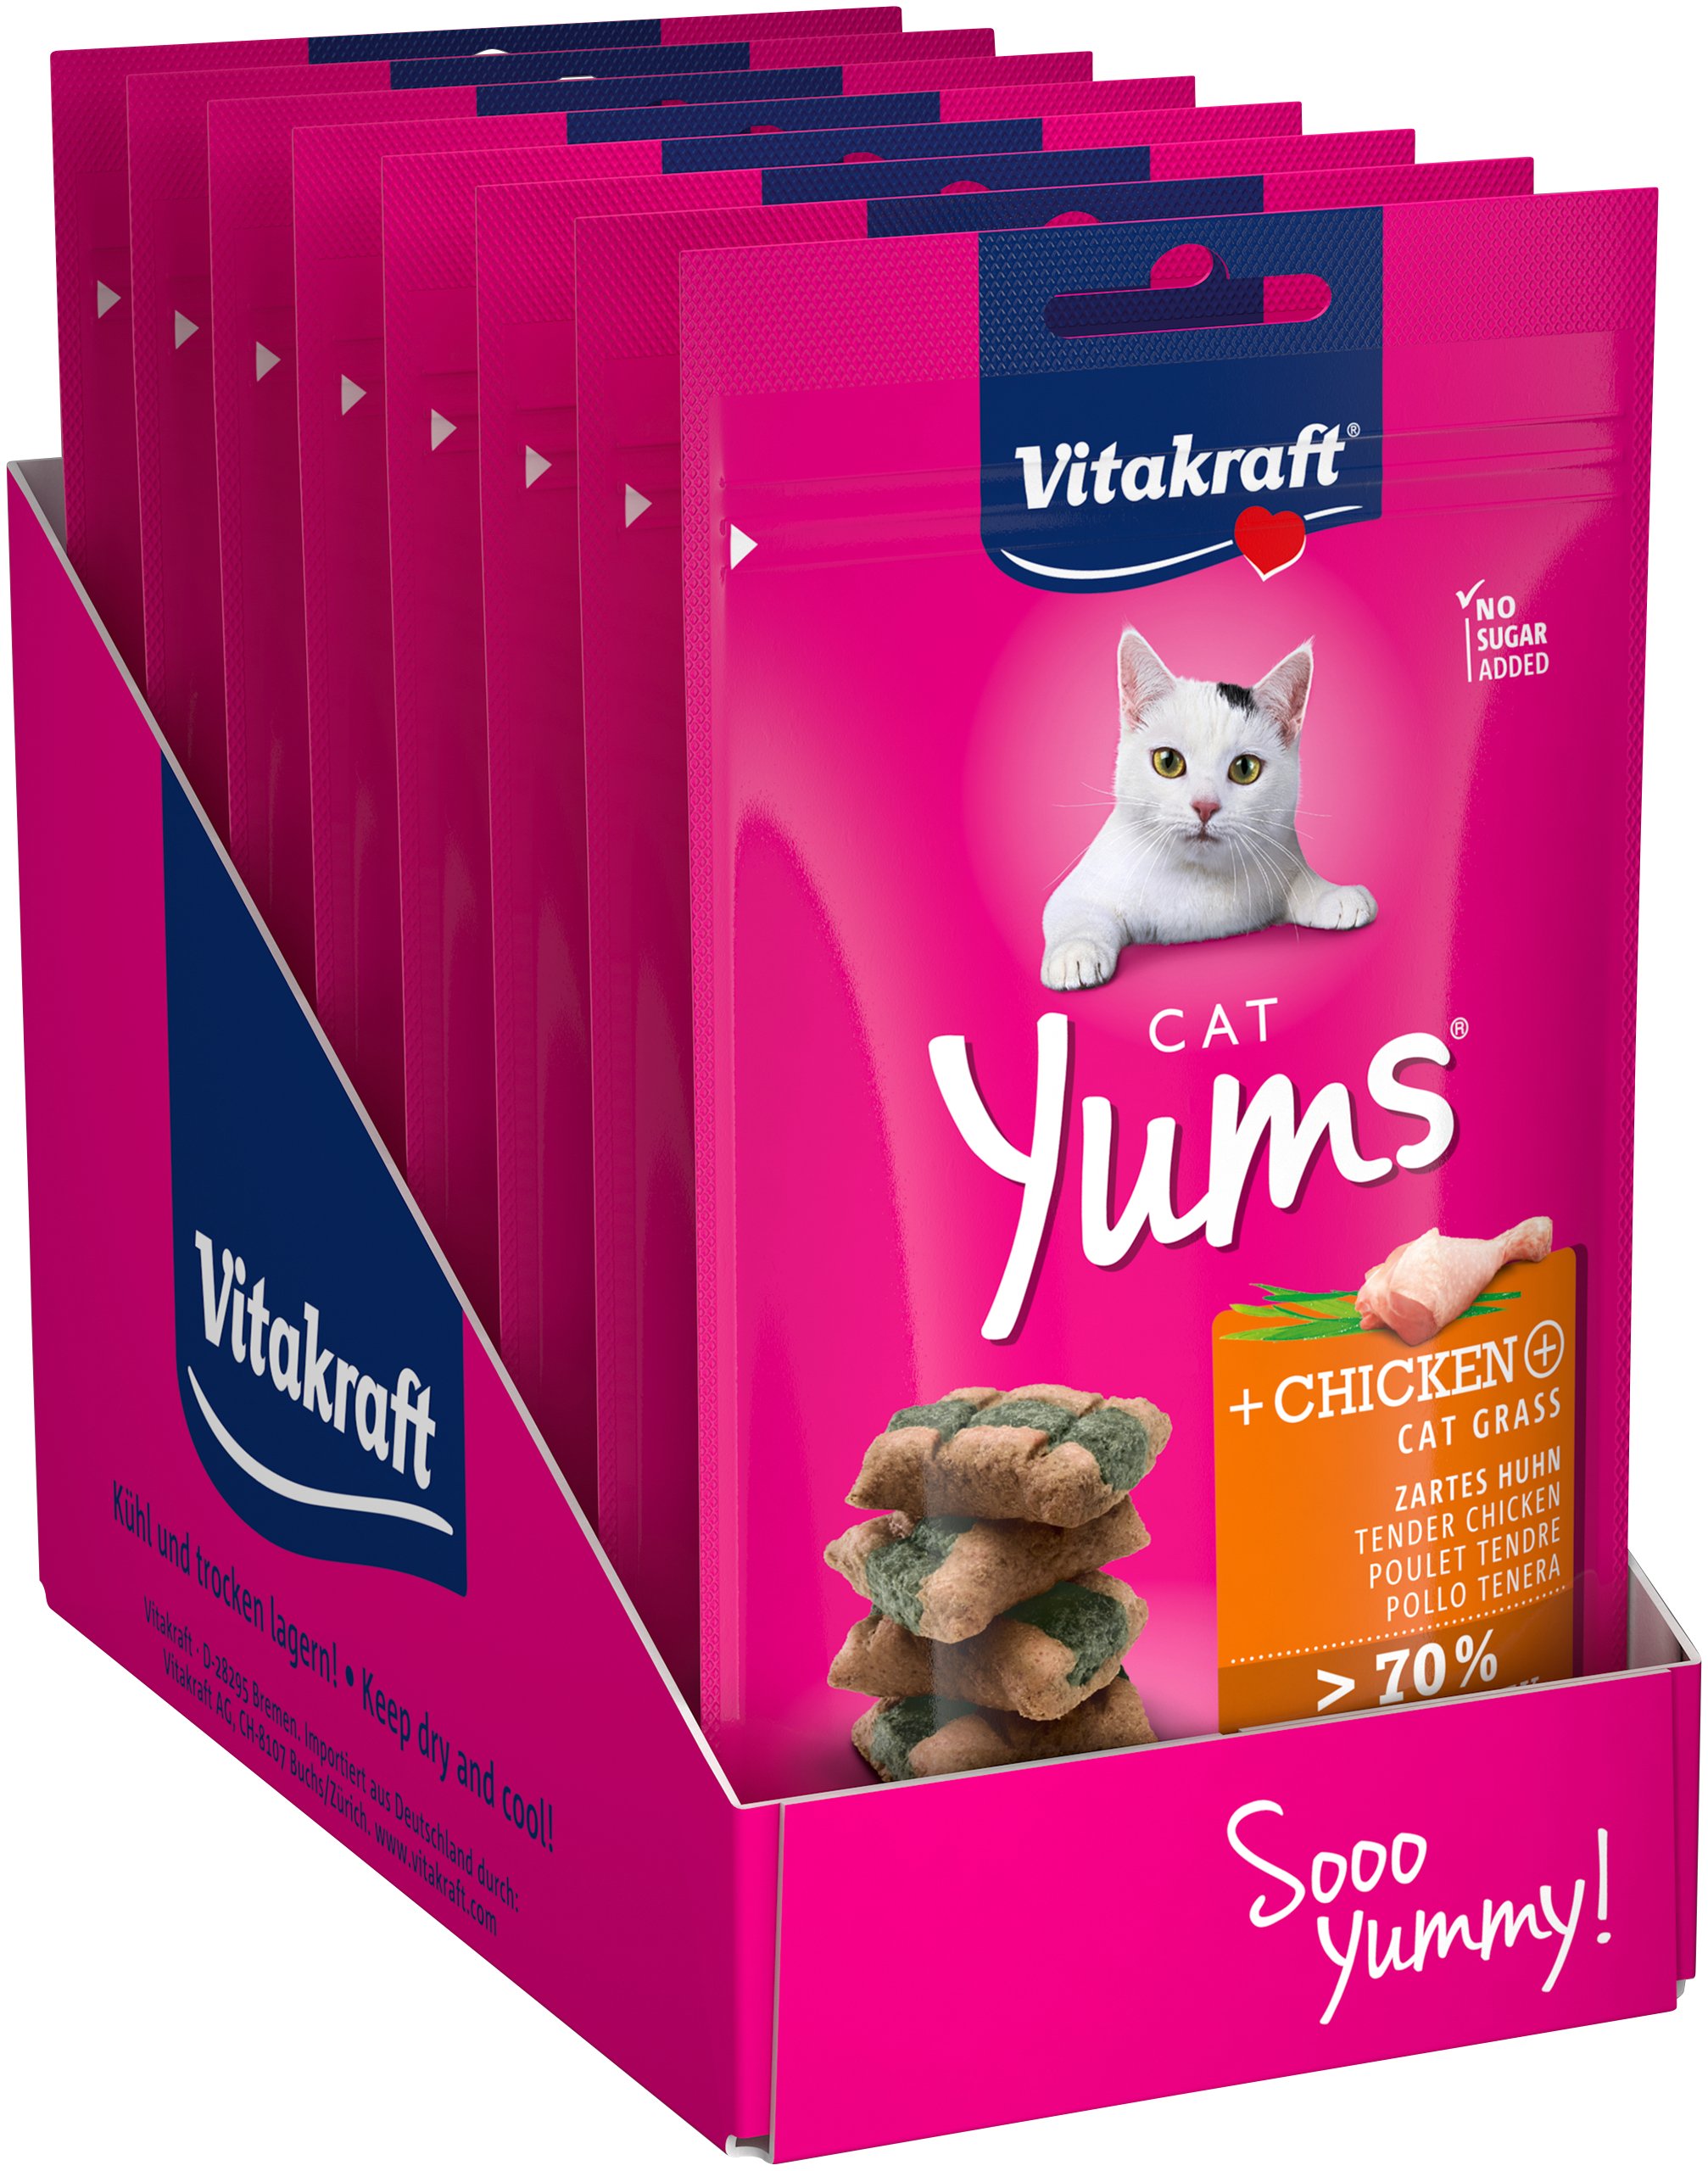 Vitakraft - Cat treats - 9 x Cat Yums with chicken and Cat Grass 40g (bundle) - Kjæledyr og utstyr